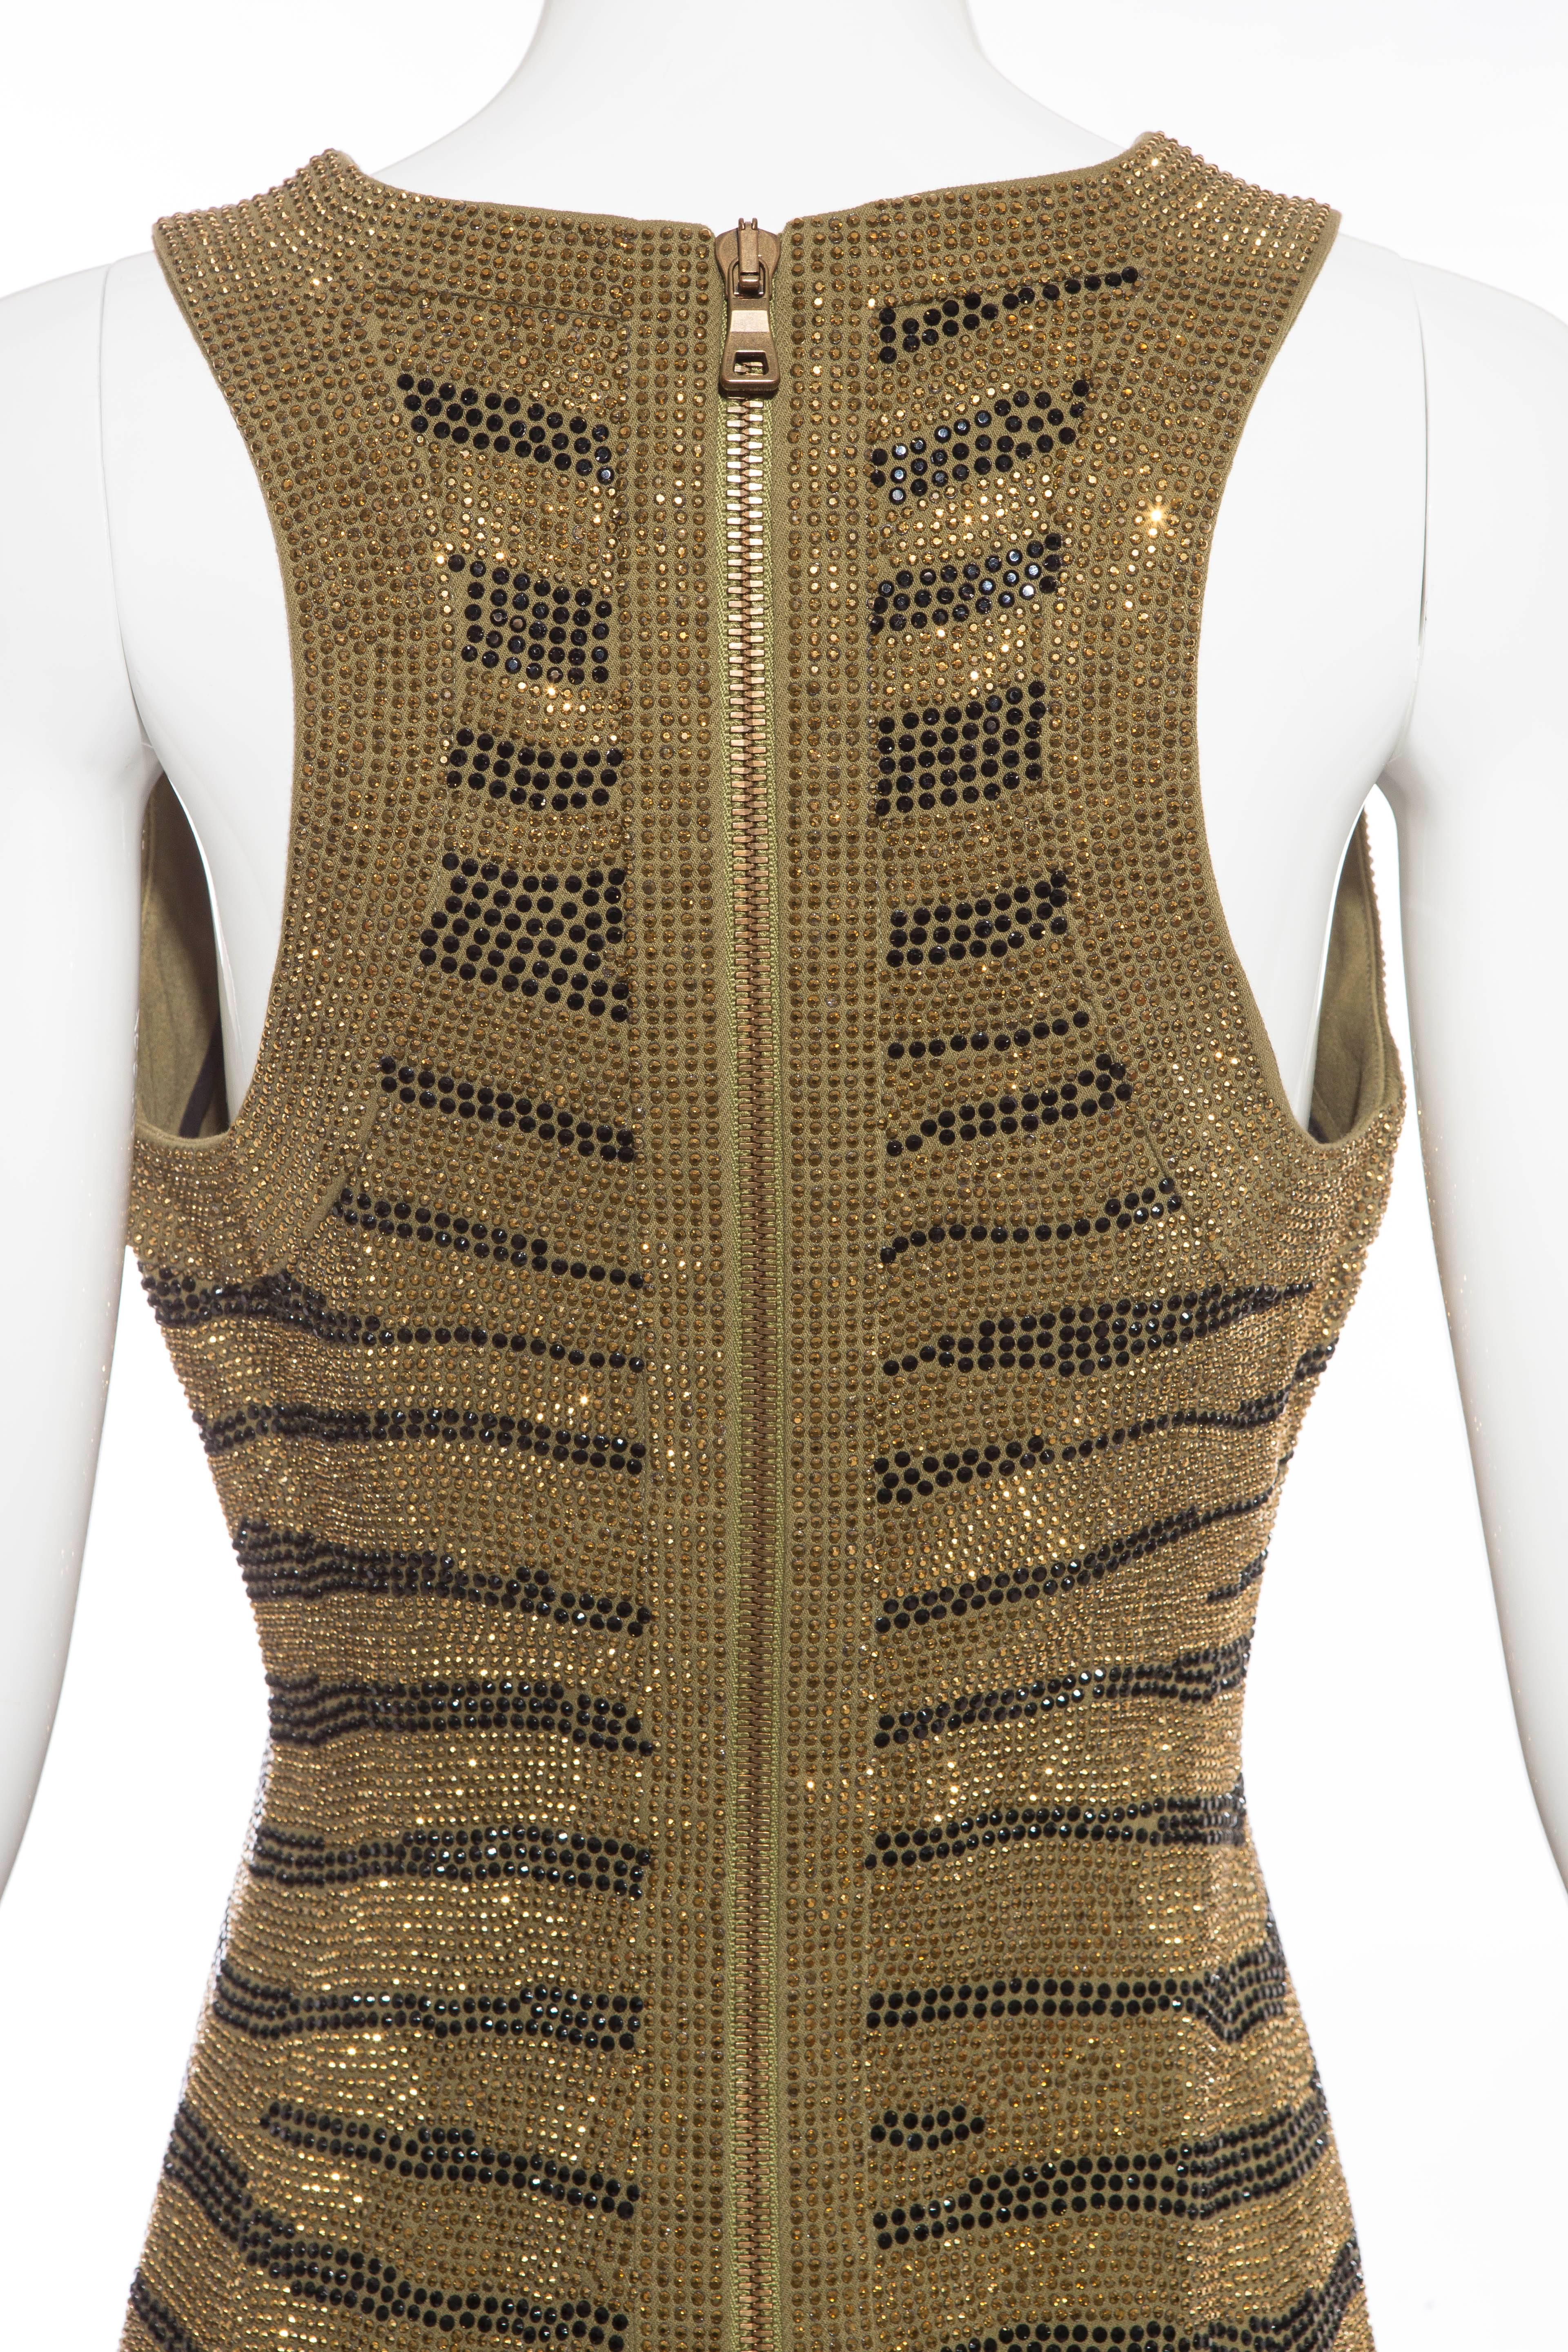 Balmain Runway Gold Zebra Print Crystal Embellished Evening Dress, Pre-Fall 2014 For Sale 1